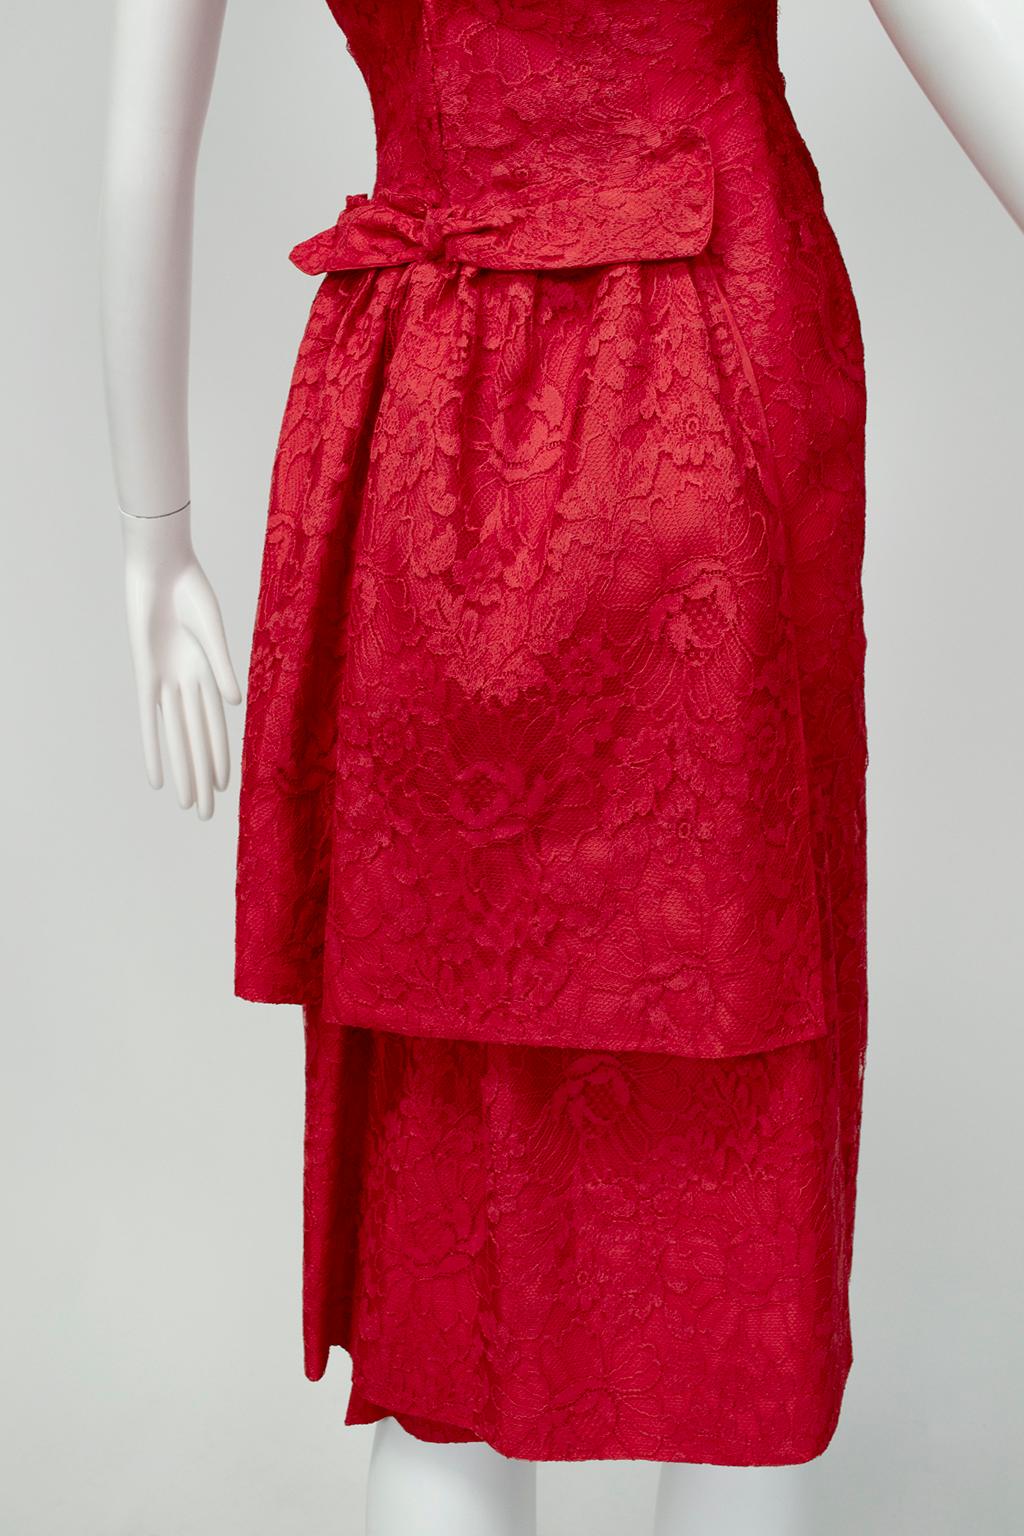 Jacques Cassia Haute Couture Five-Alarm Red Backless Lace Bustle Dress -M, 1960s 2